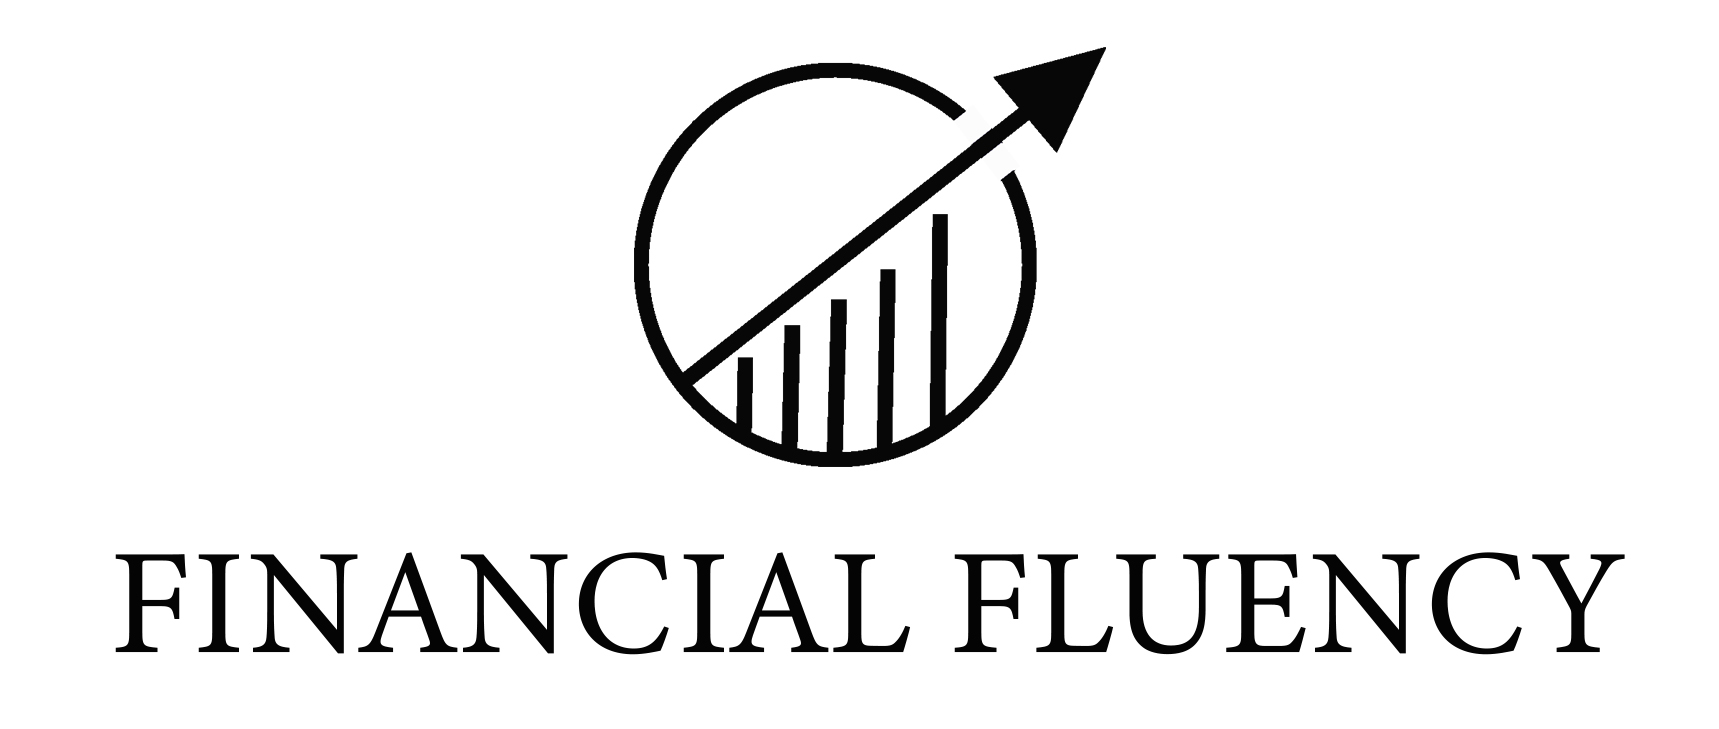 financial fluency logo